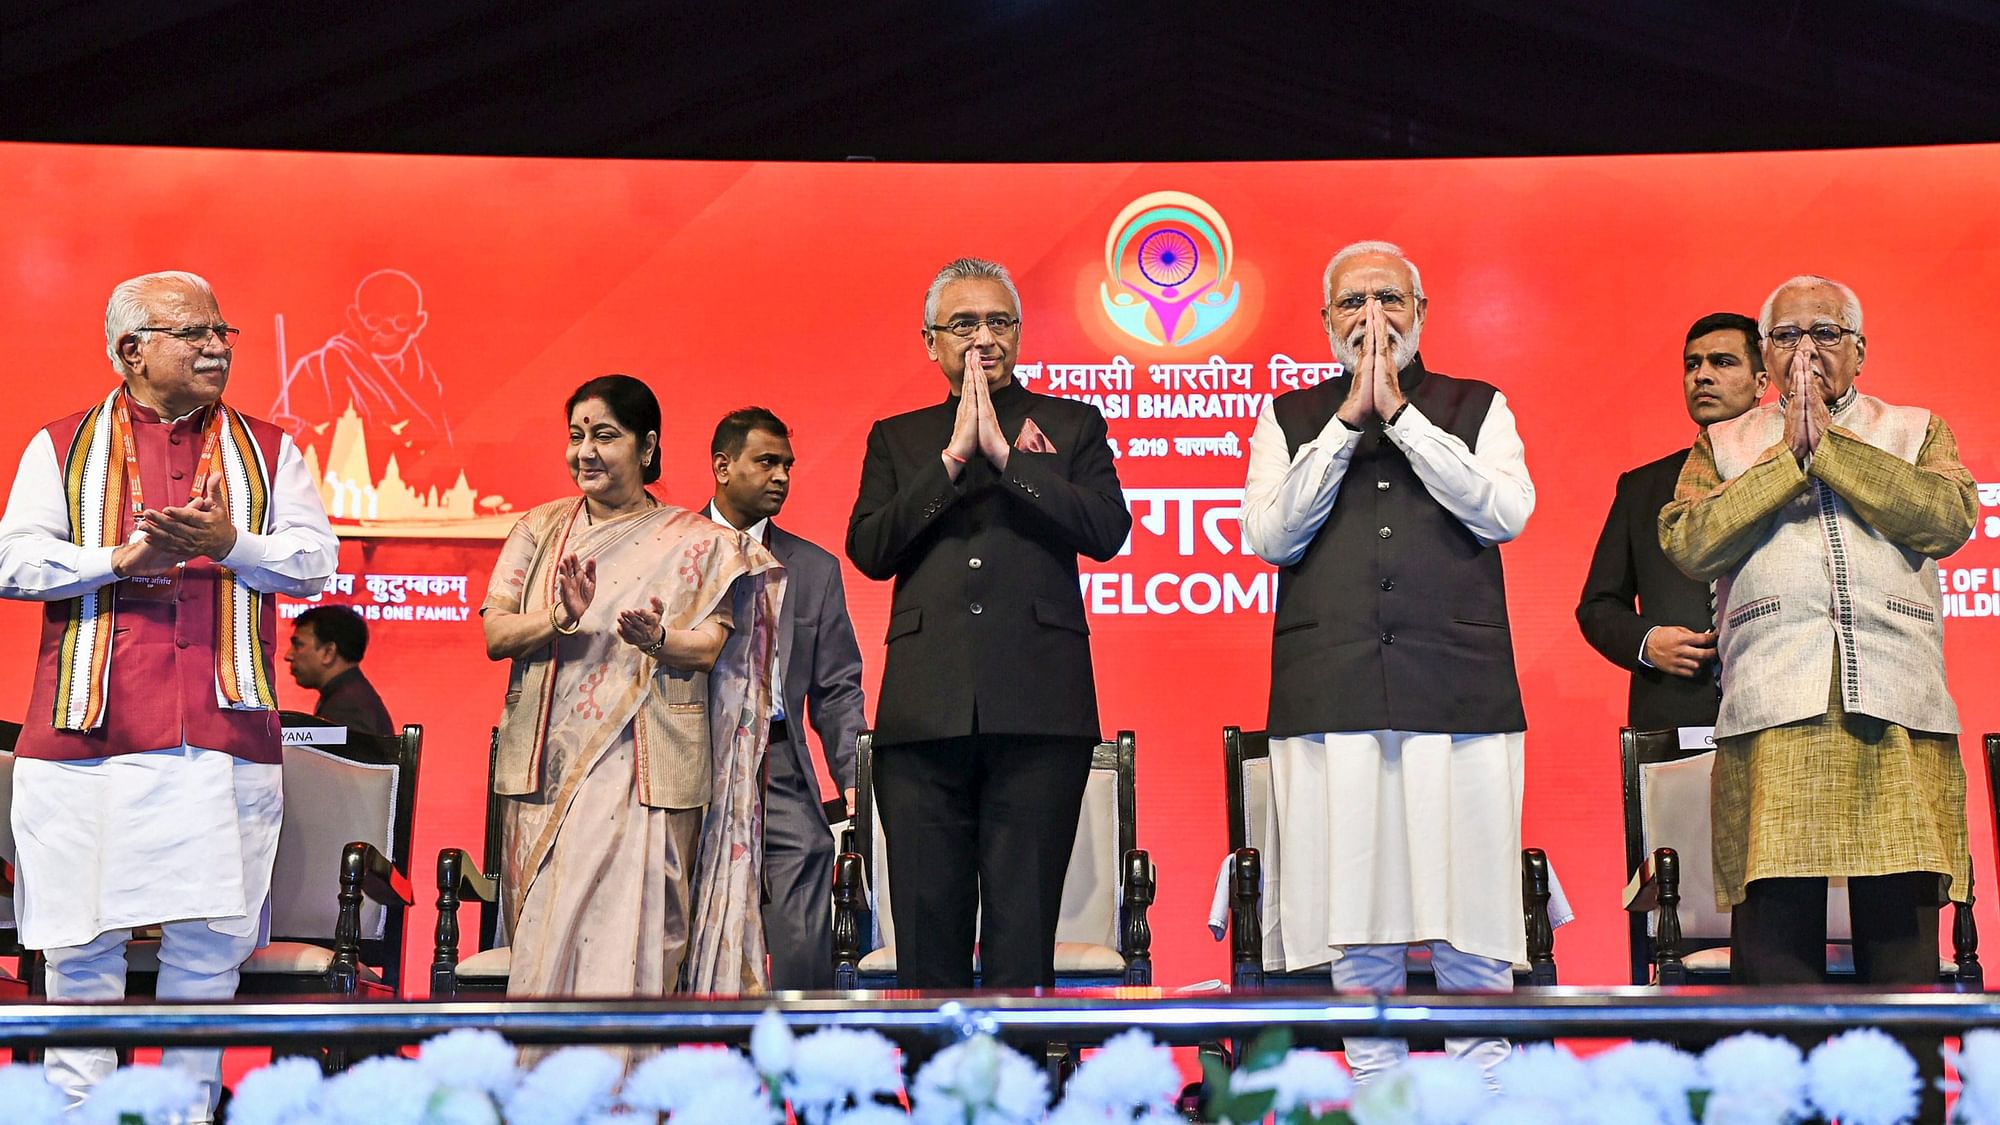 Prime Minister Narendra Modi inaugurated the 15th Pravasi Bharatiya Divas in his Parliamentary constituency Varanasi on Tuesday, 22 January.